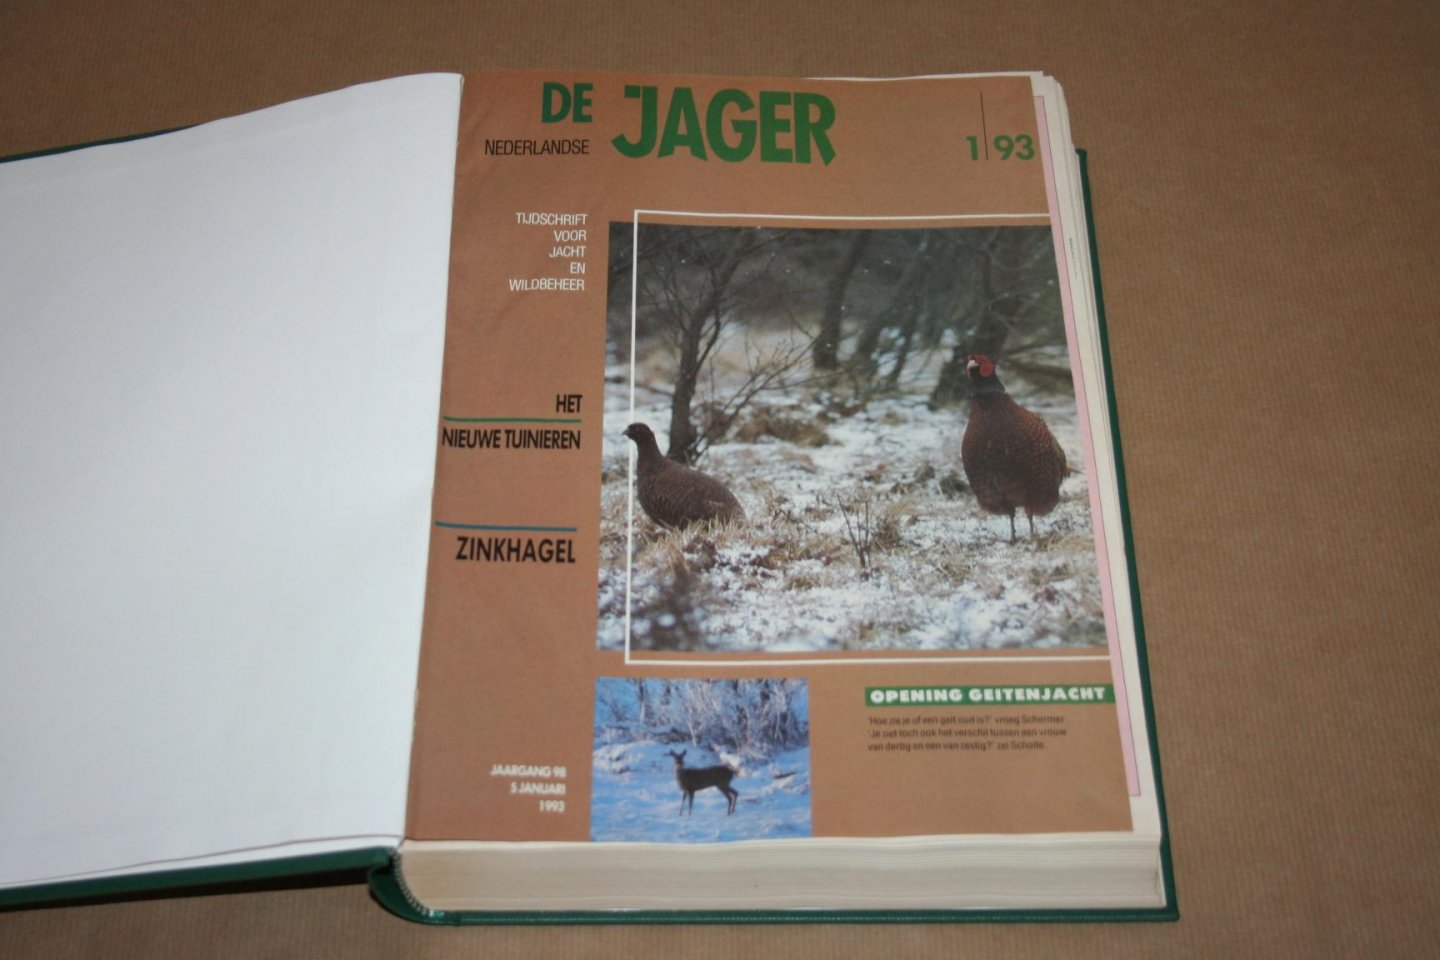  - De Nederlandse Jager - Complete jaargang 1993